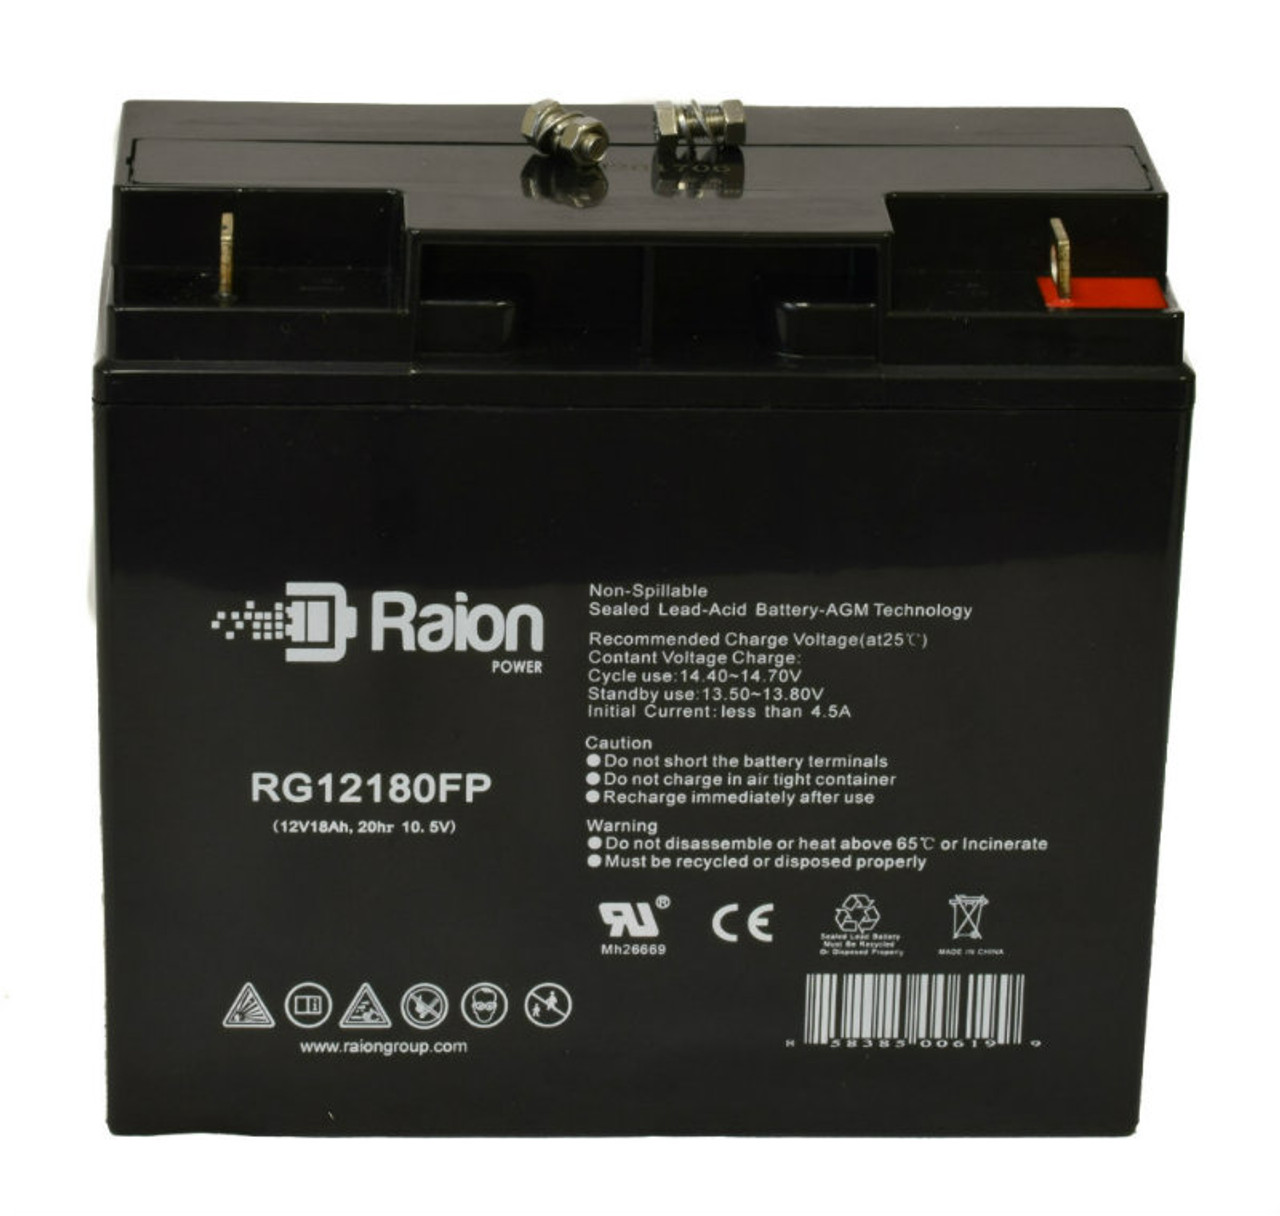 Raion Power RG12180FP 12V 18Ah Lead Acid Battery for Bright Way Group BWG 12180